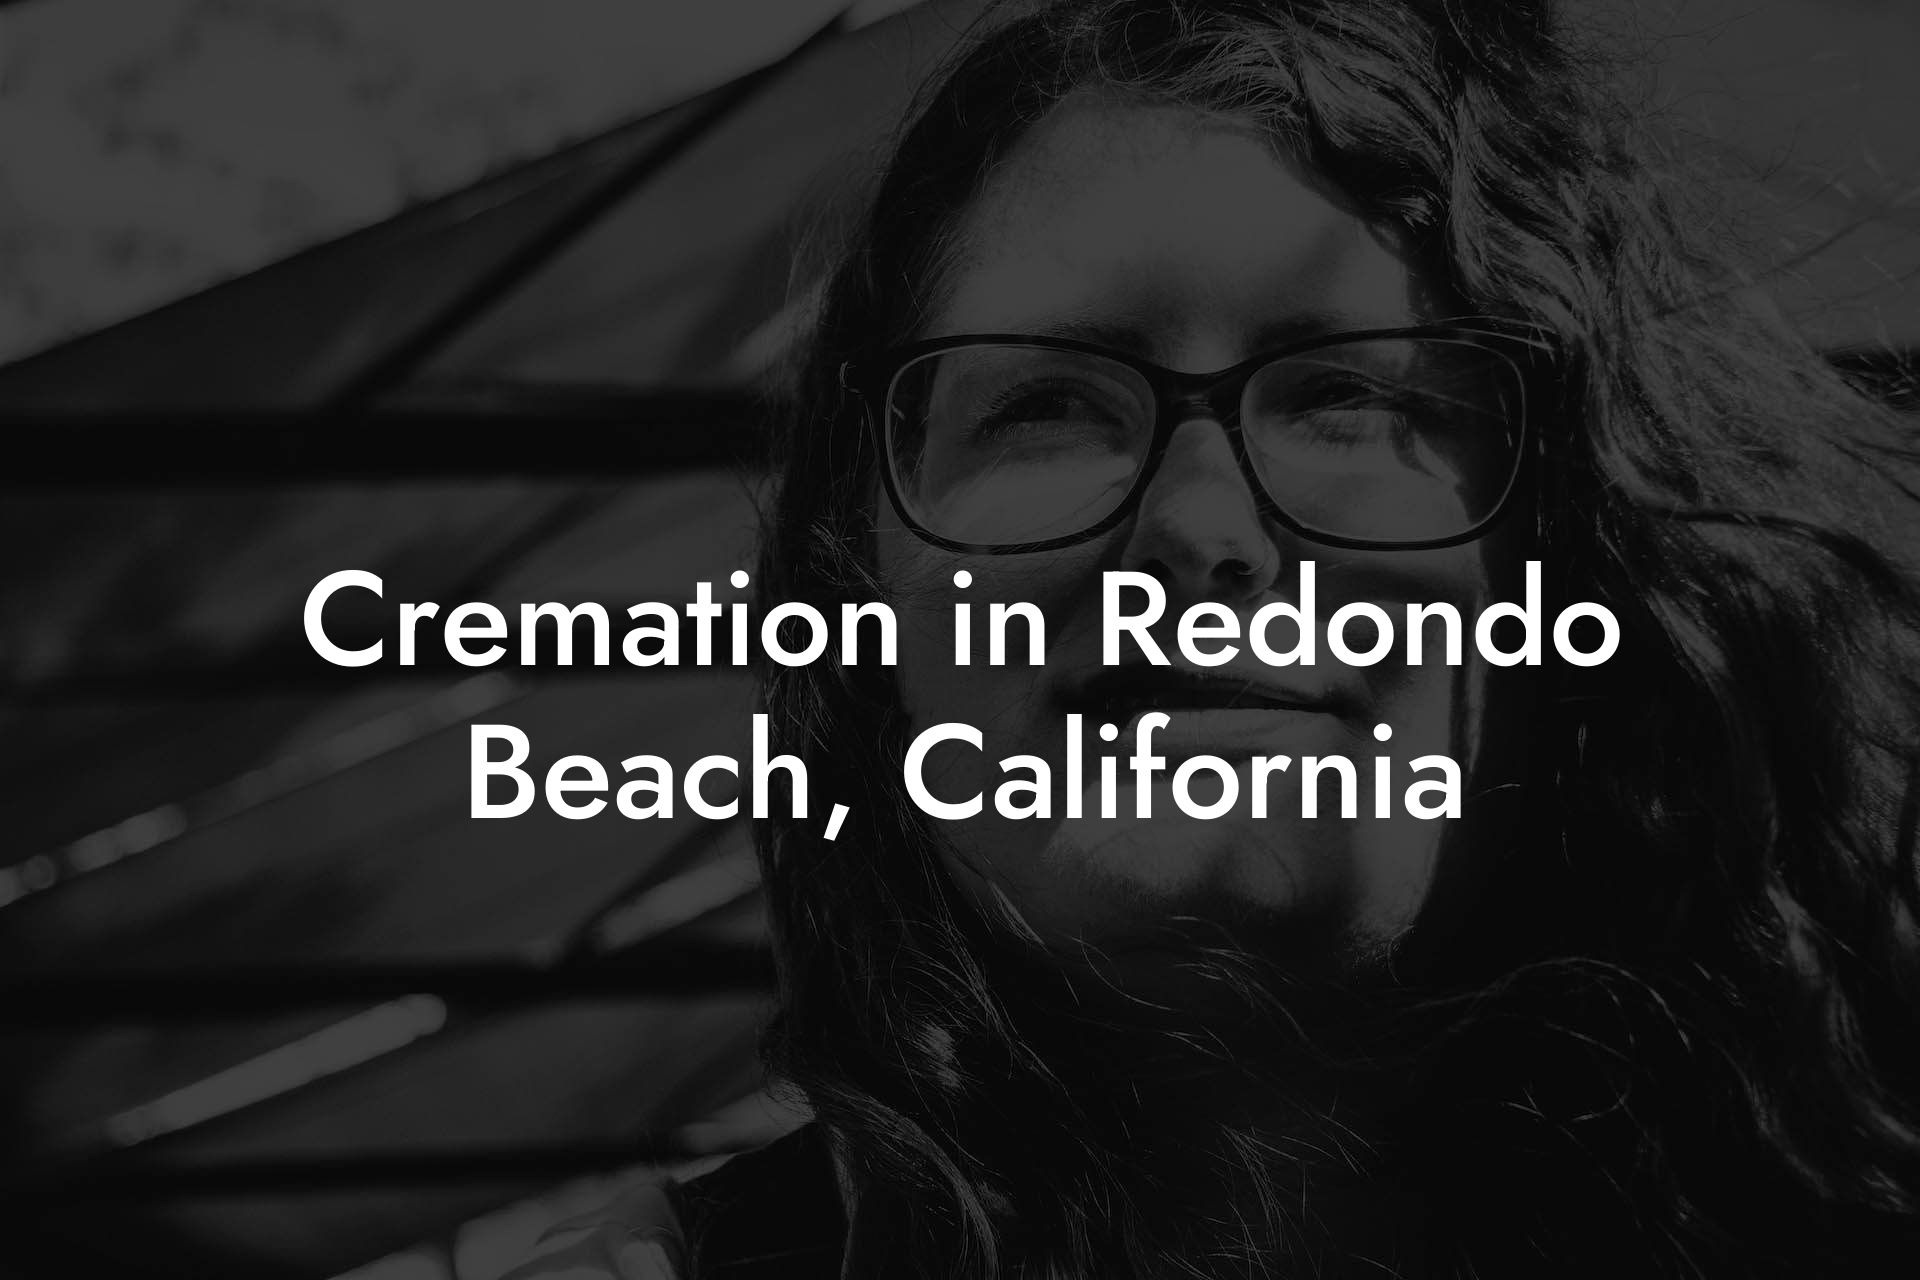 Cremation in Redondo Beach, California